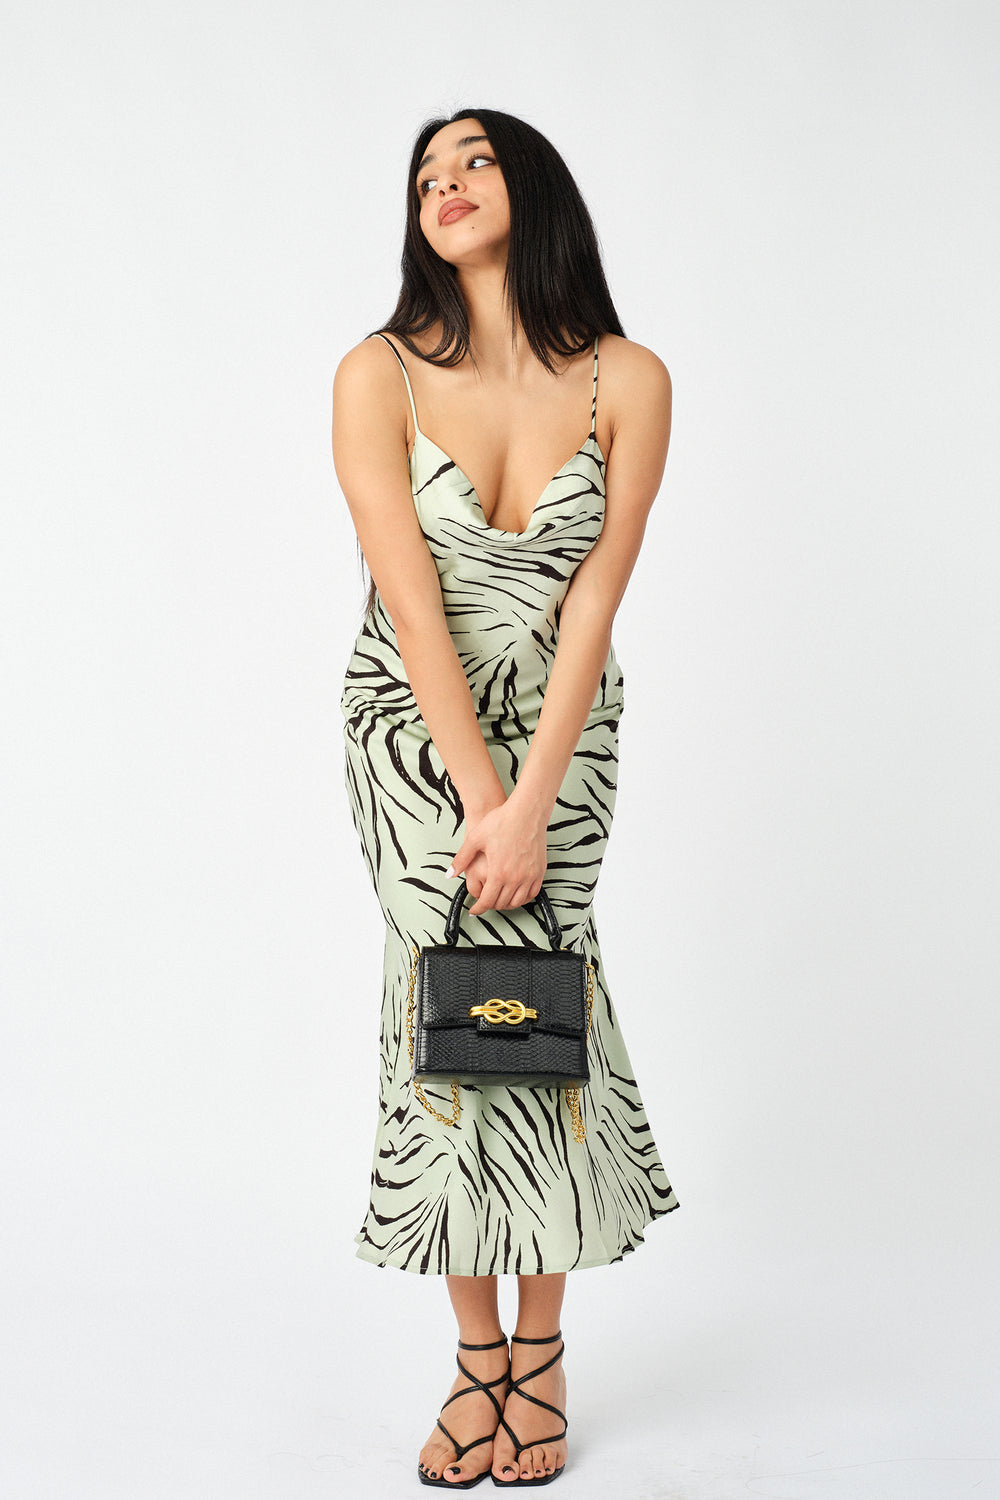 Tiger Print Scoop Back Strap Detail Dress - Sugar + Style